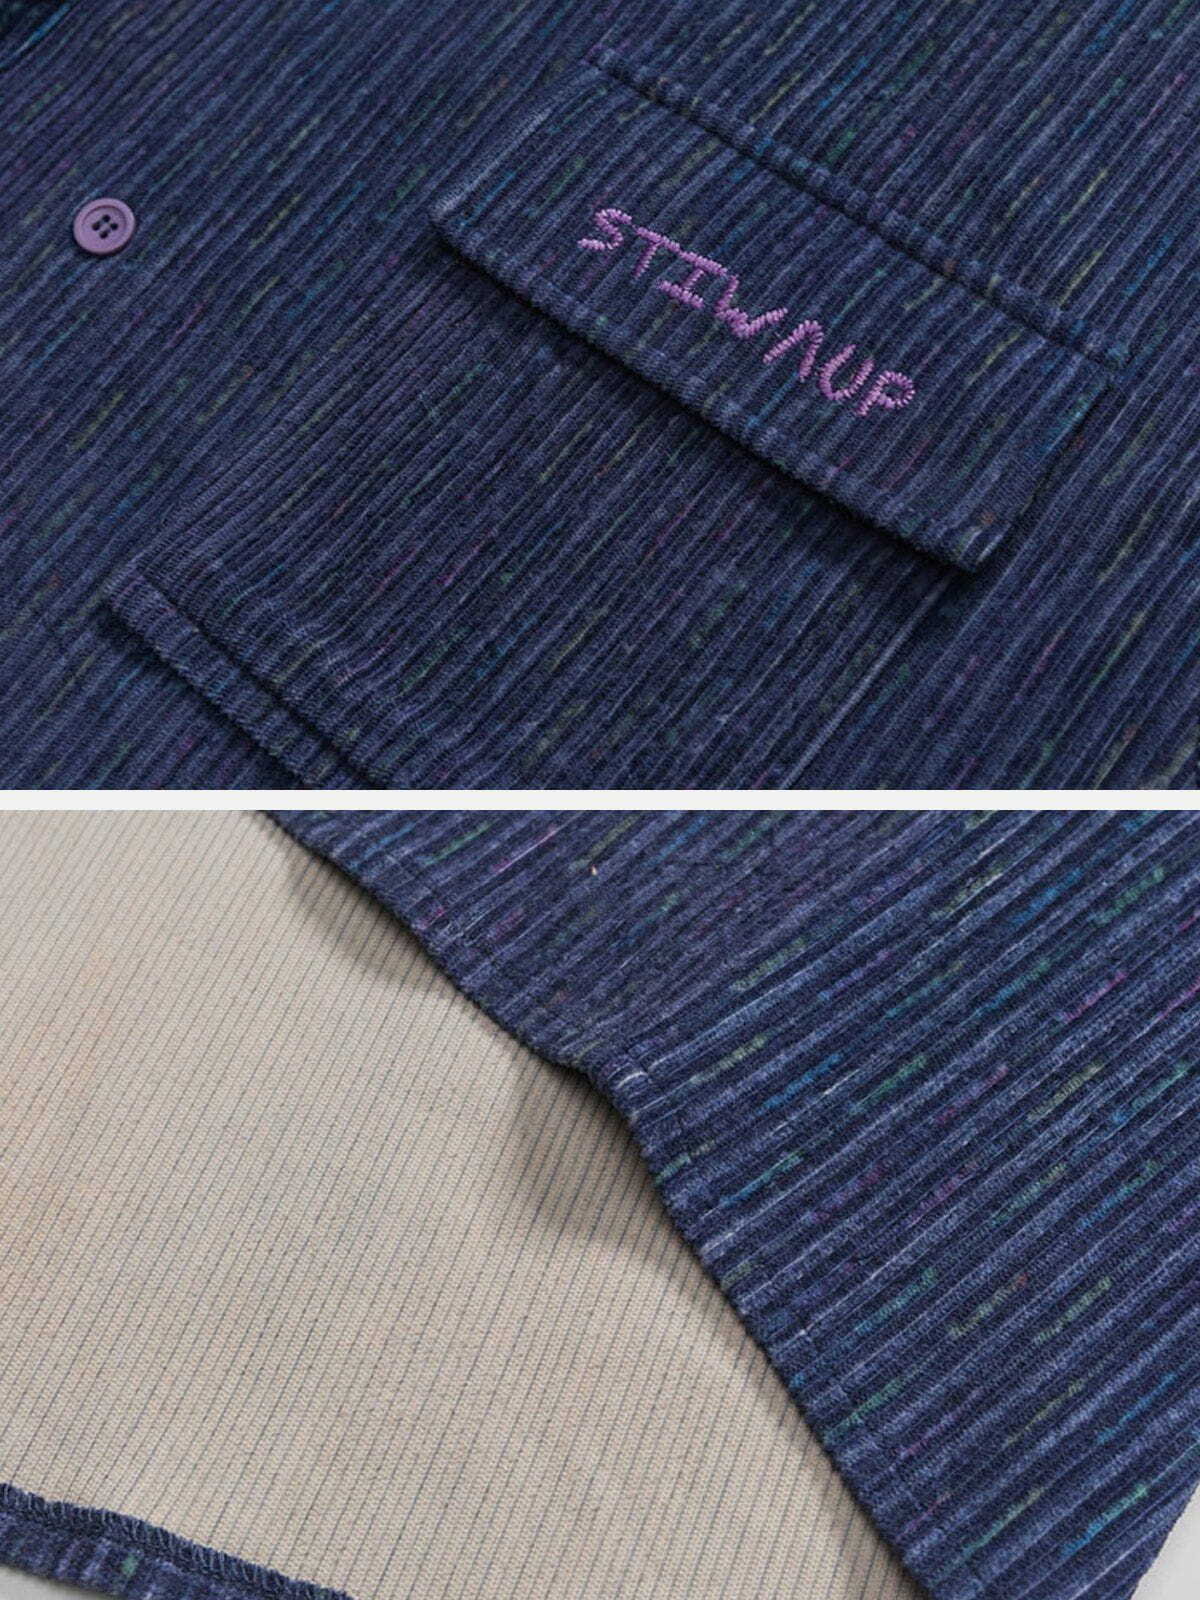 stiwaup' longsleeved shirt edgy & retro streetwear 7422